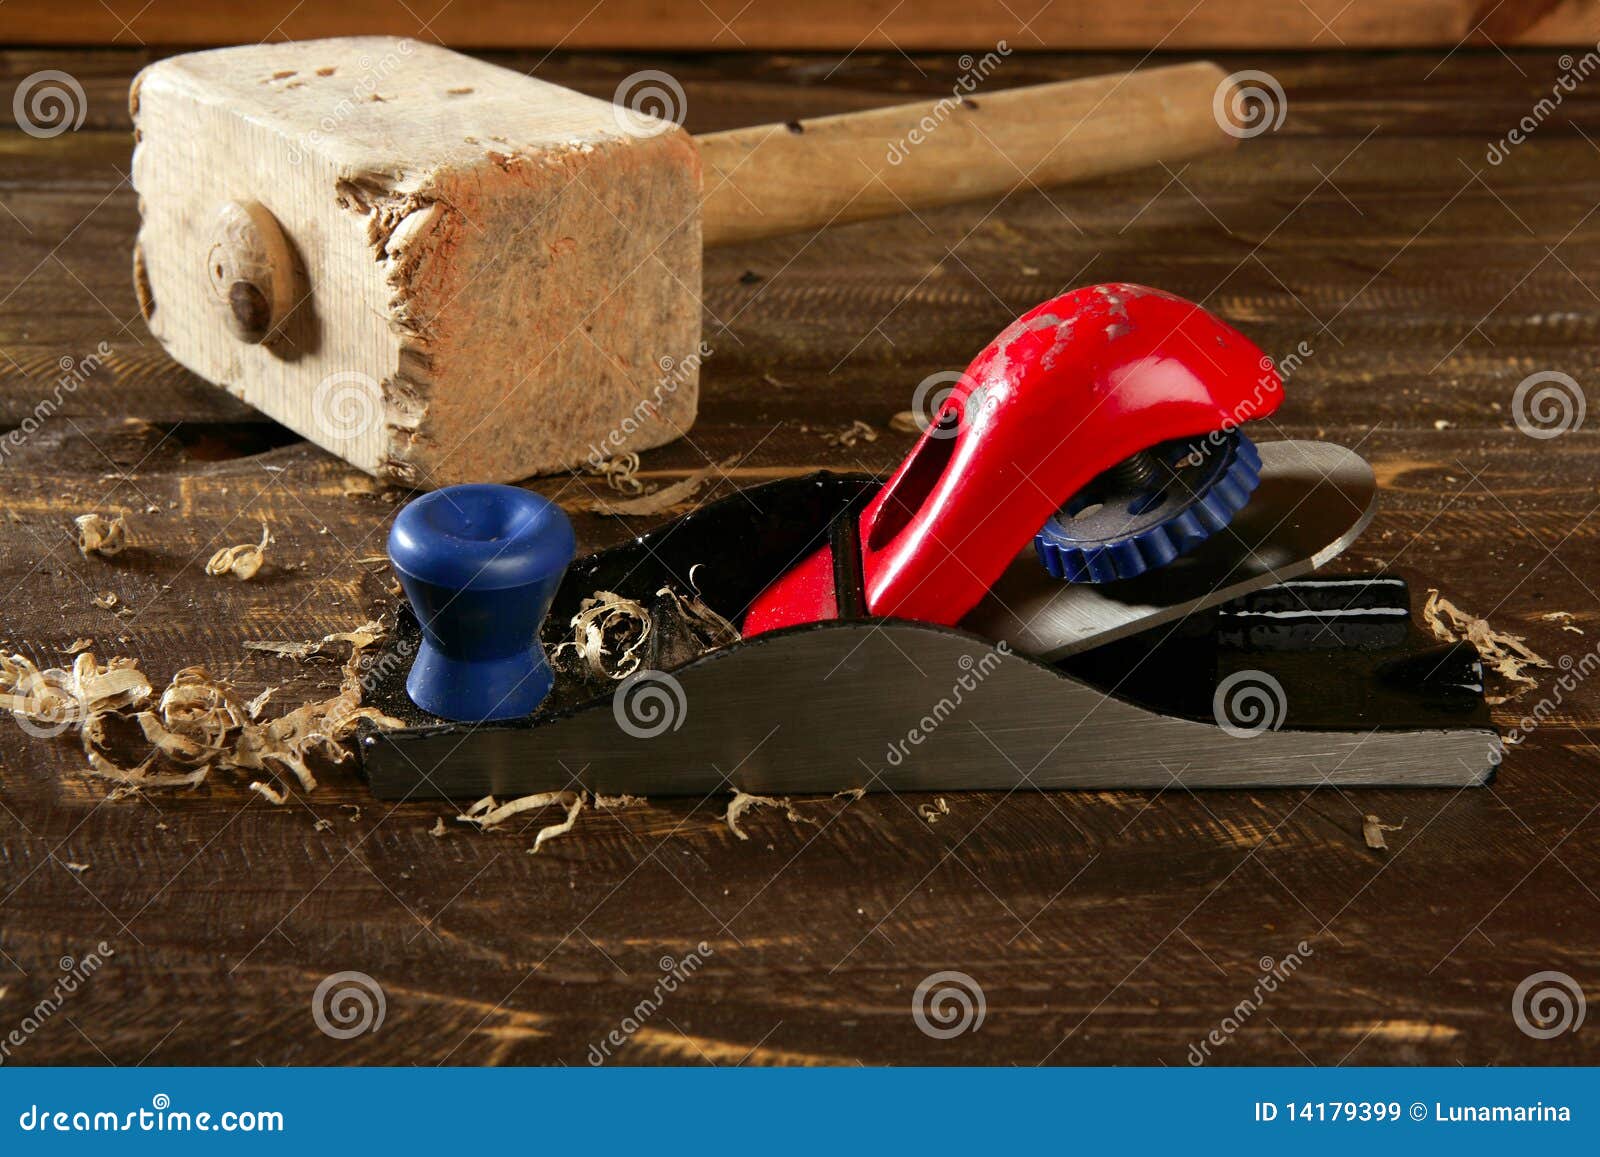 Wood Shaving Tools